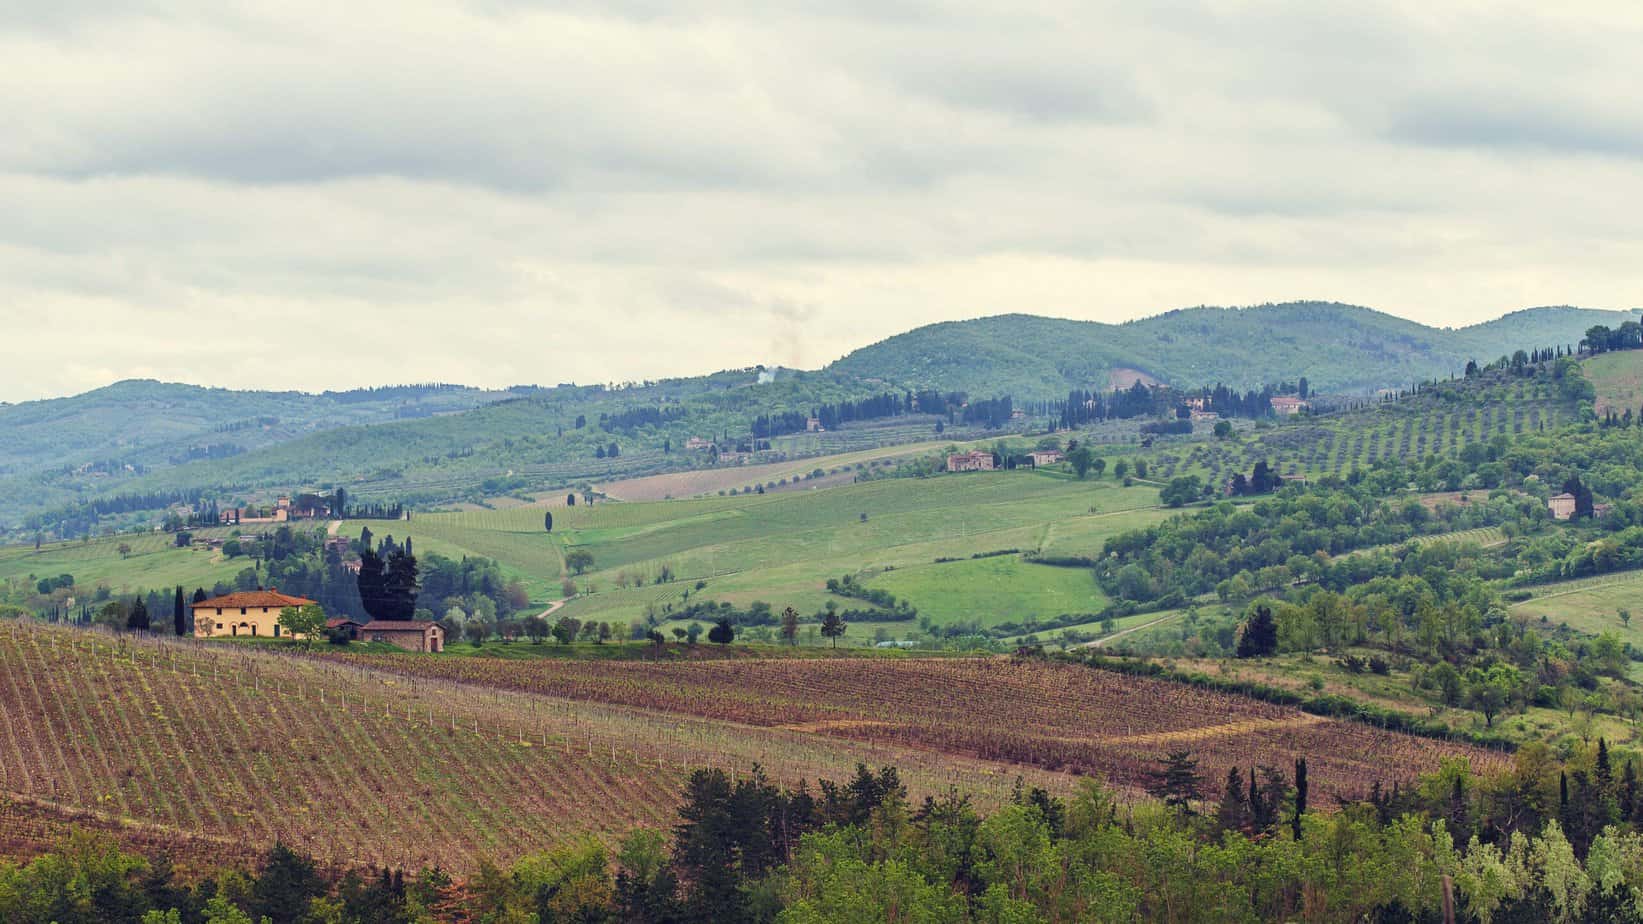 The Vineyards Of Chianti 2021 08 30 18 54 34 Utc Edited Scaled